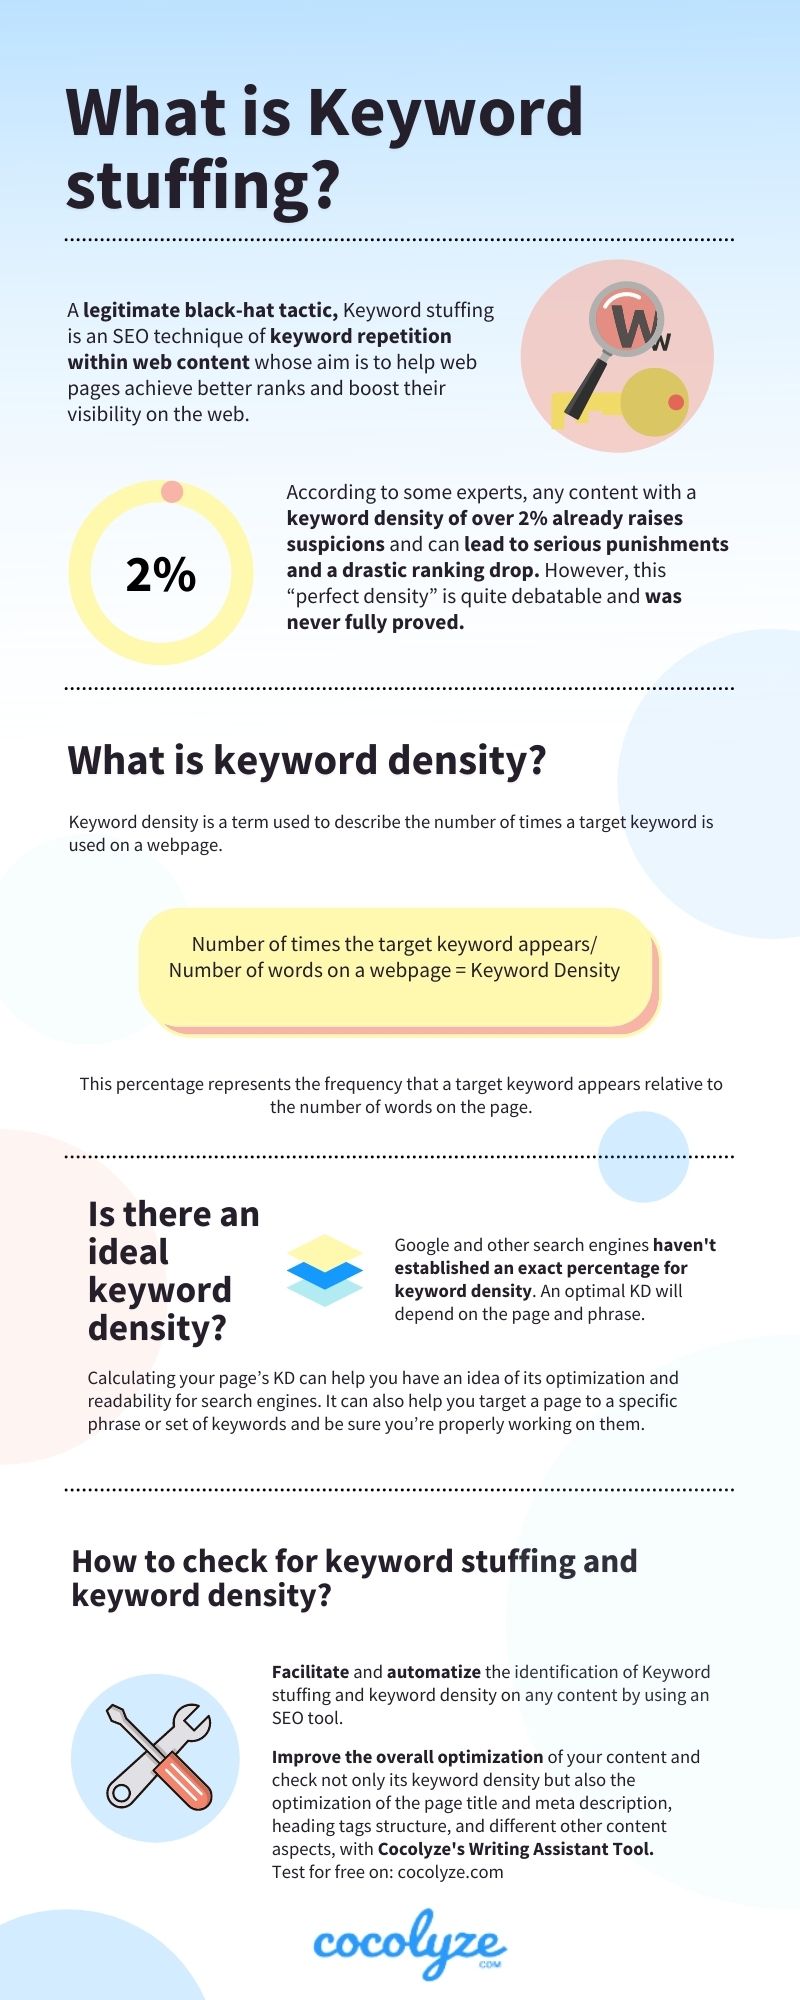 Keyword stuffing and keyword density